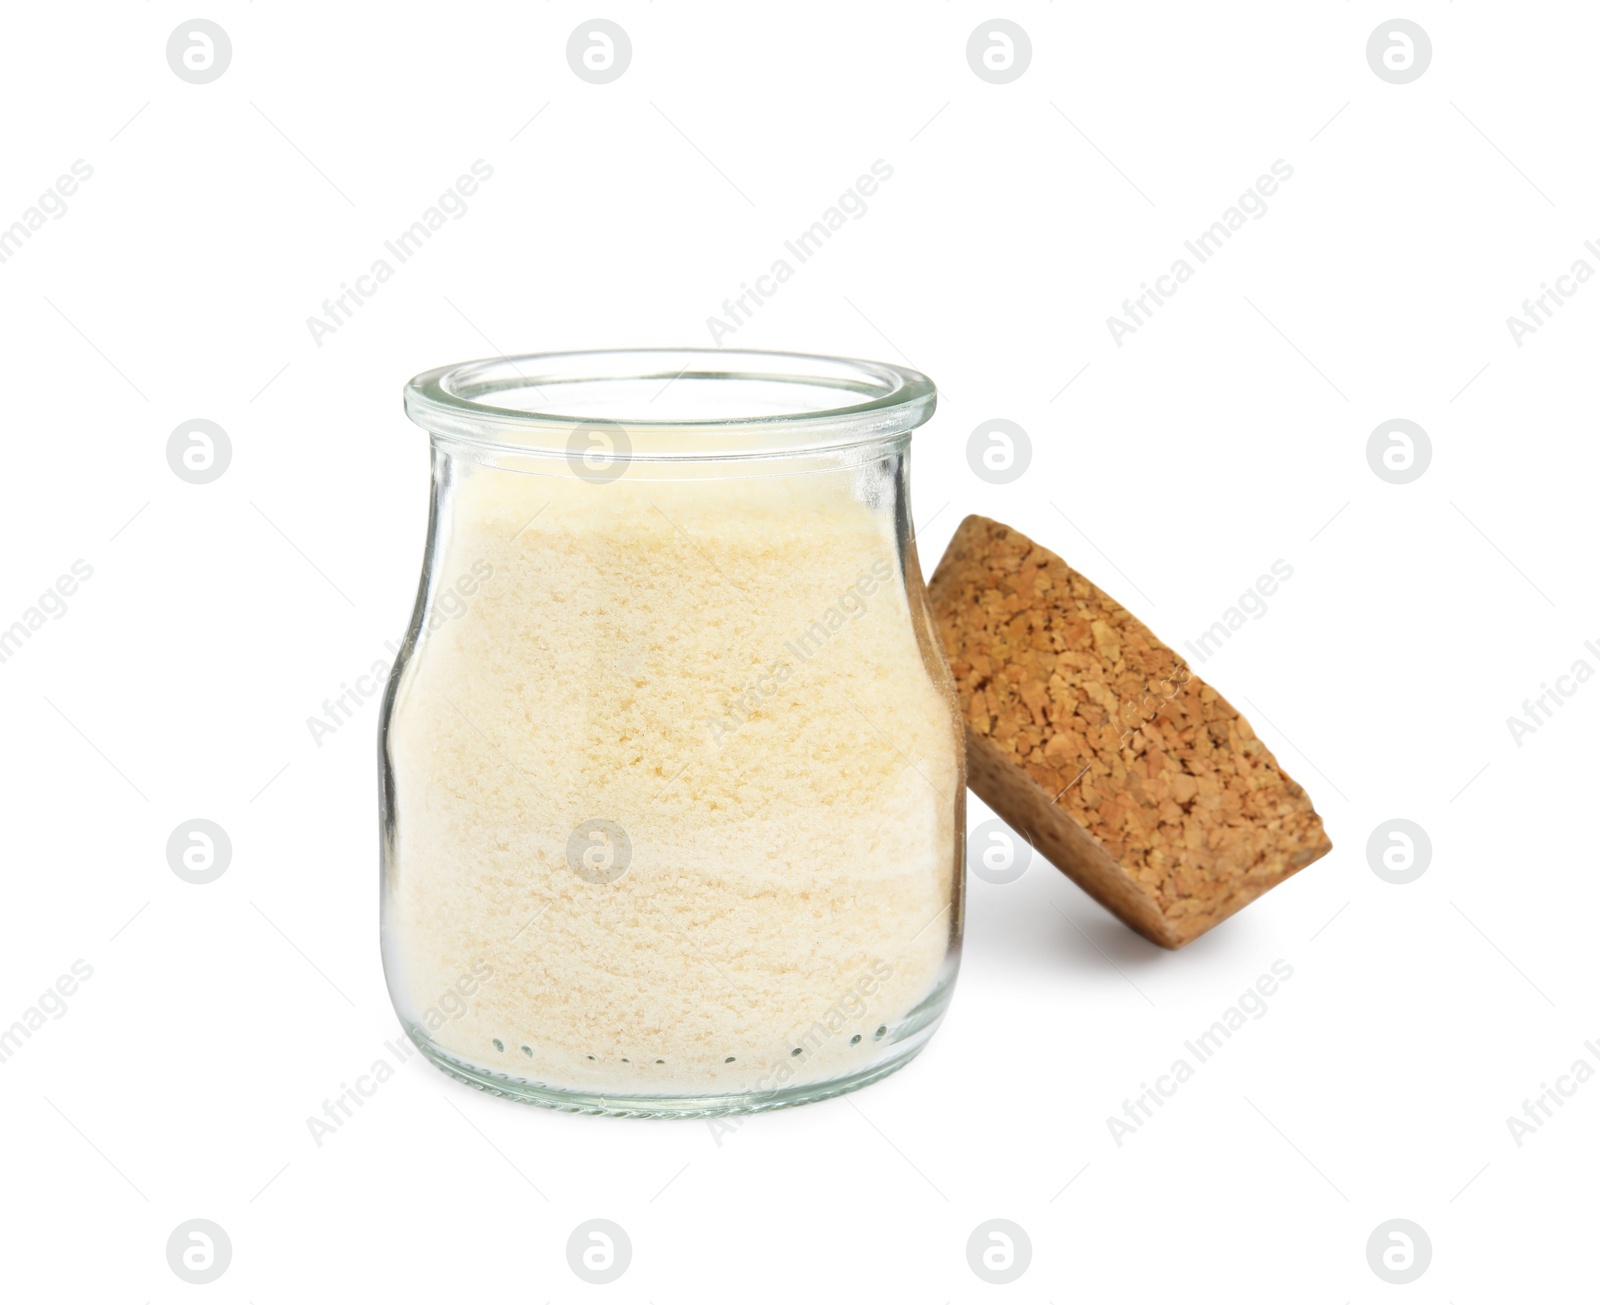 Photo of Glass jar with gelatin powder and cork on white background